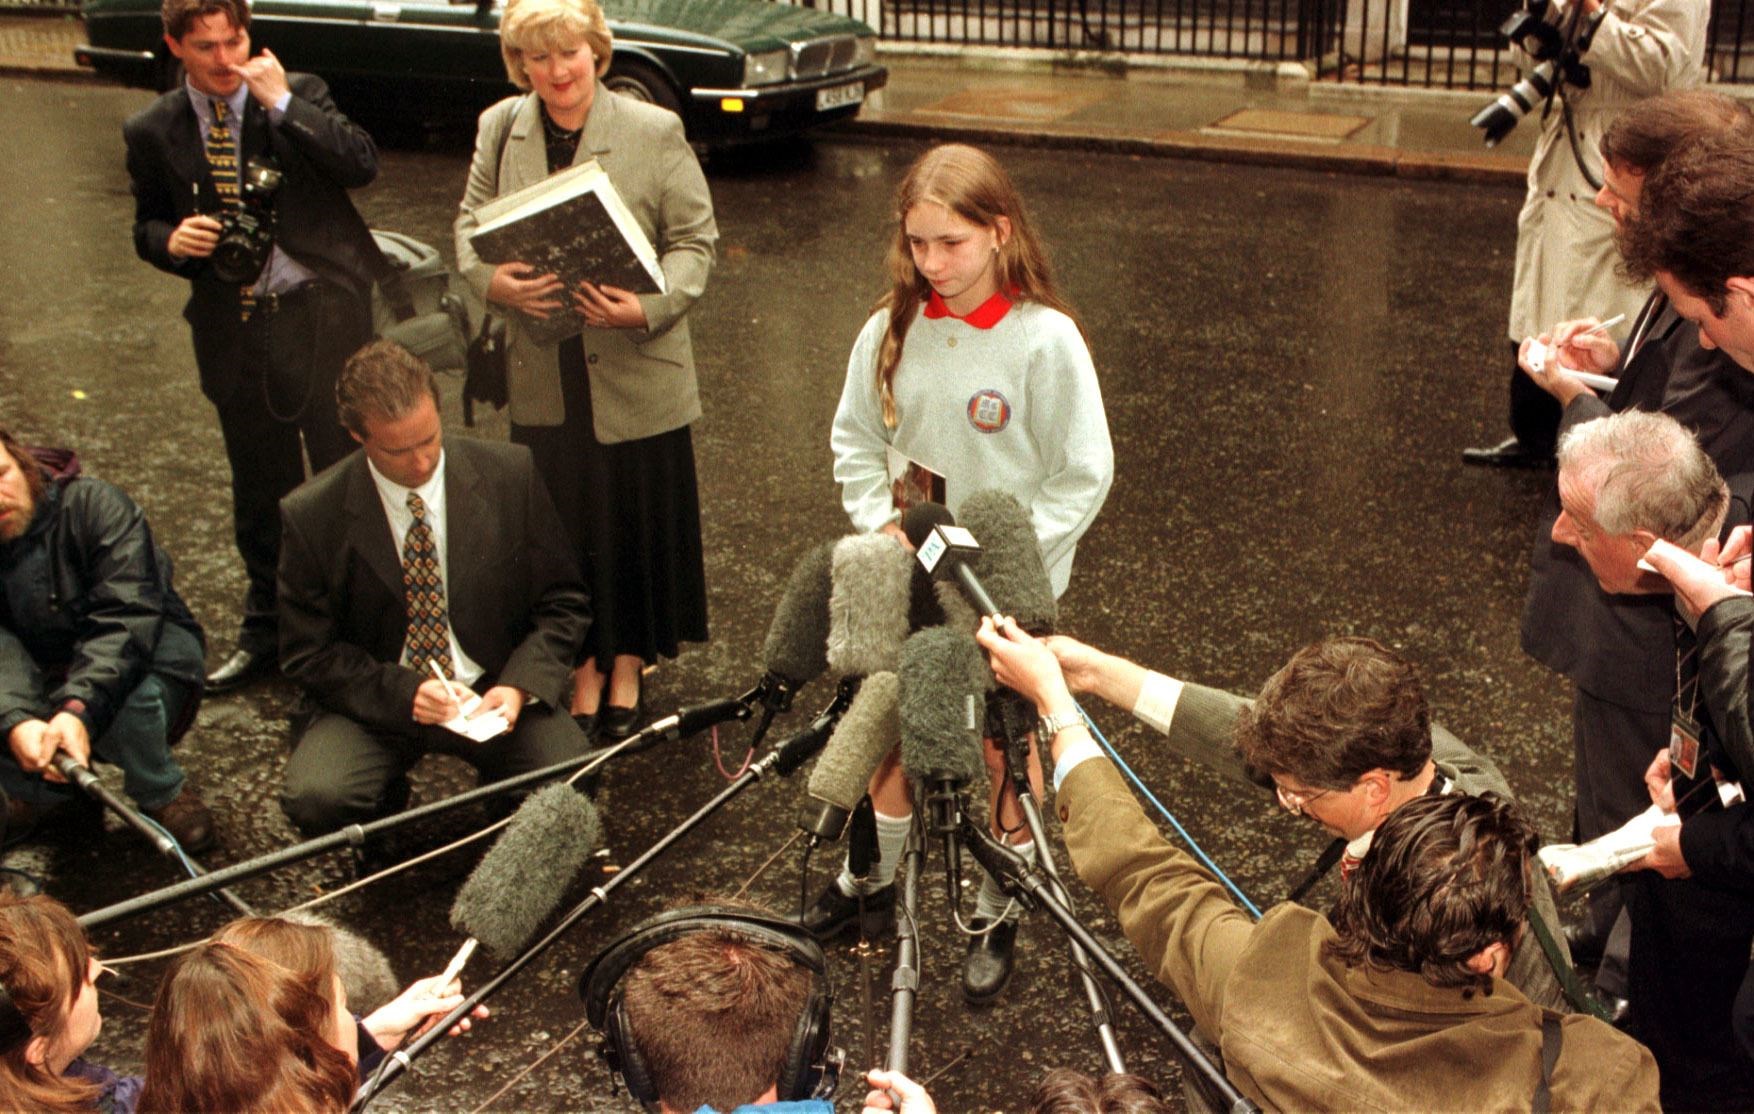 Belfast schoolgirl Margaret Gibney being interviewed by the press after meeting Tony Blair in Downing Street in 1997 (Peter Jordan/PA)